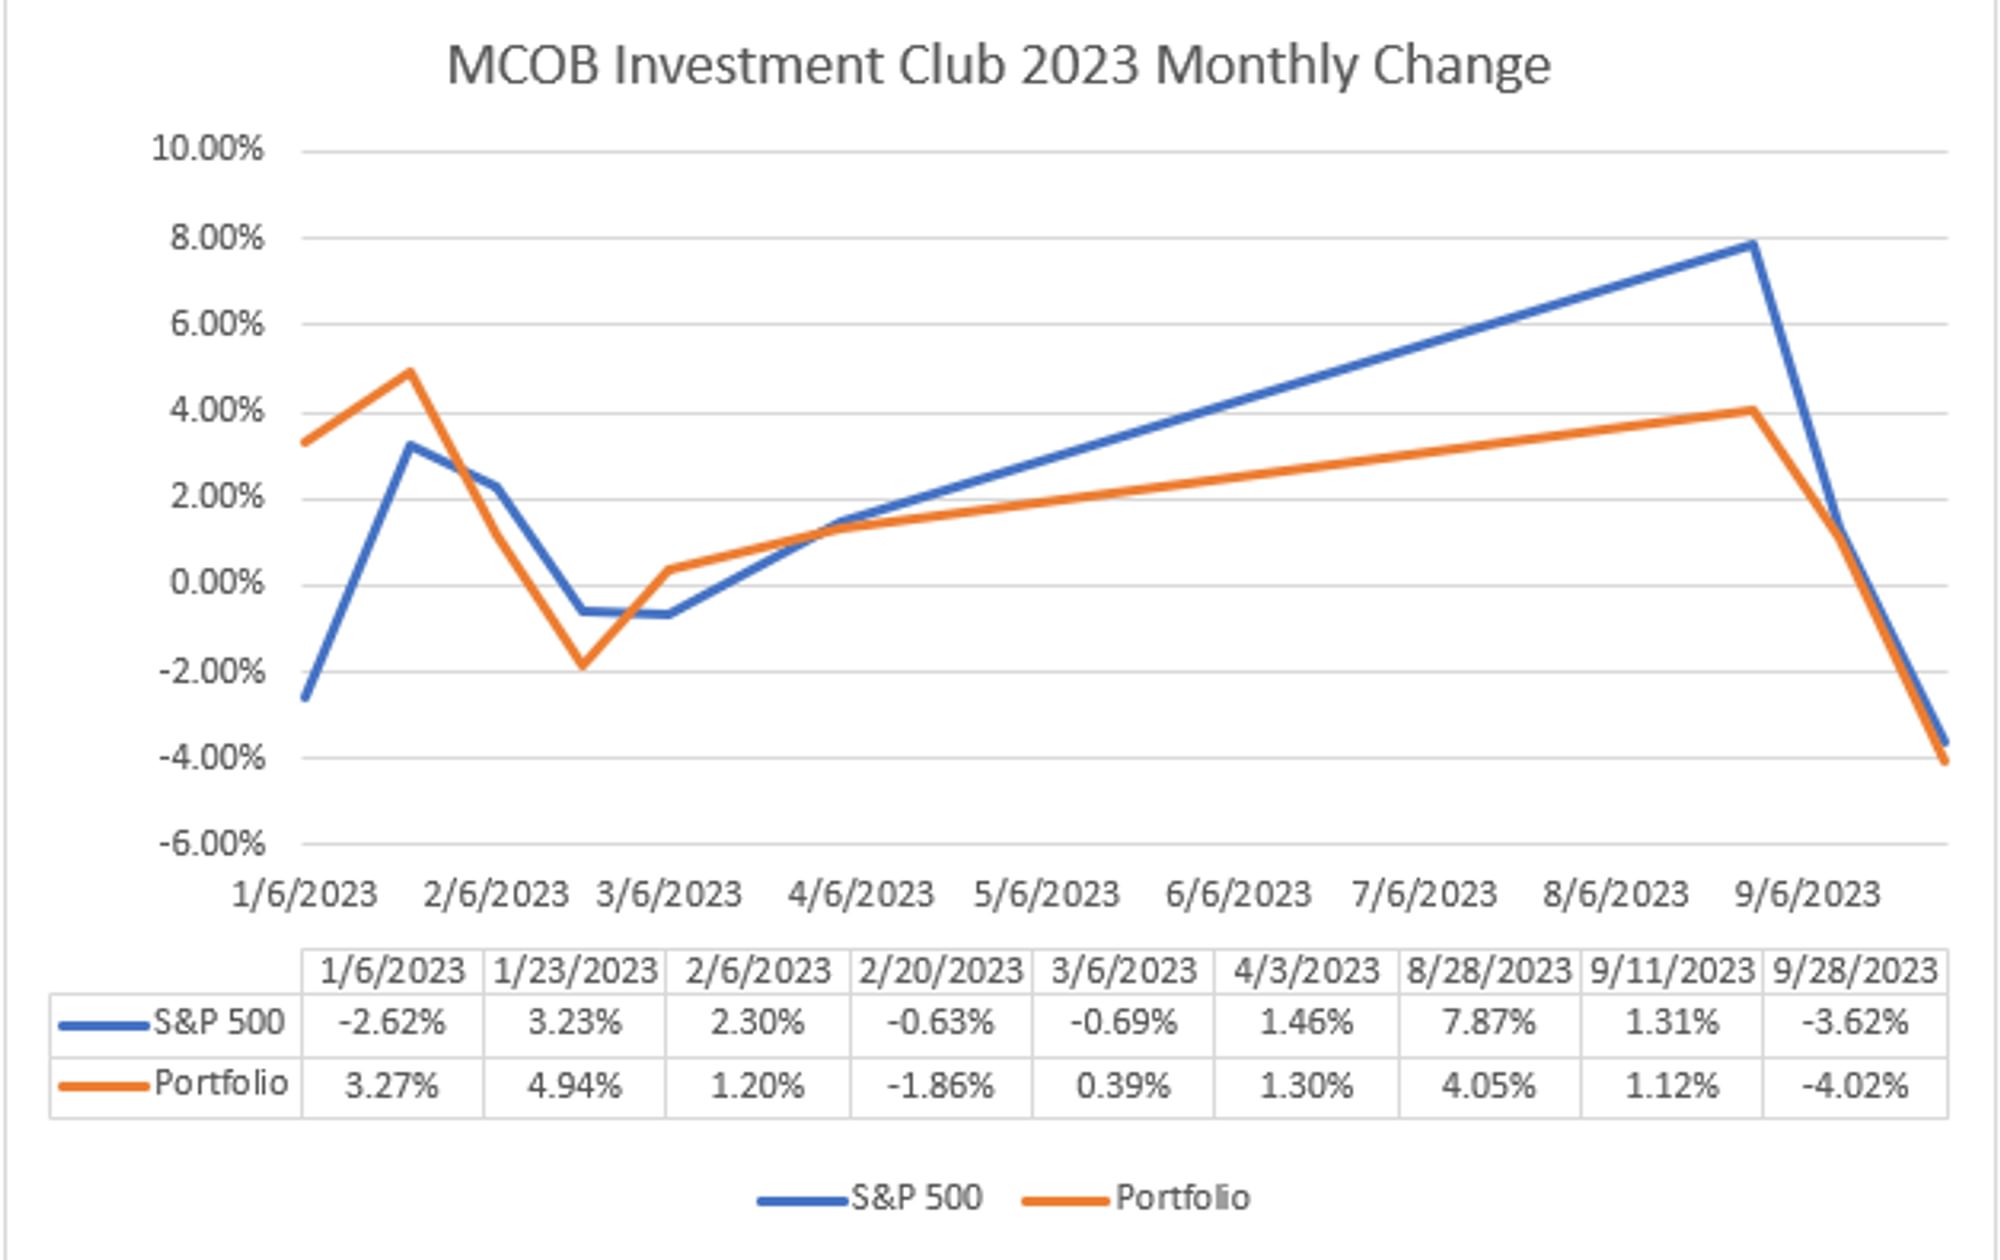 UMHB investment club monthly portfolio change